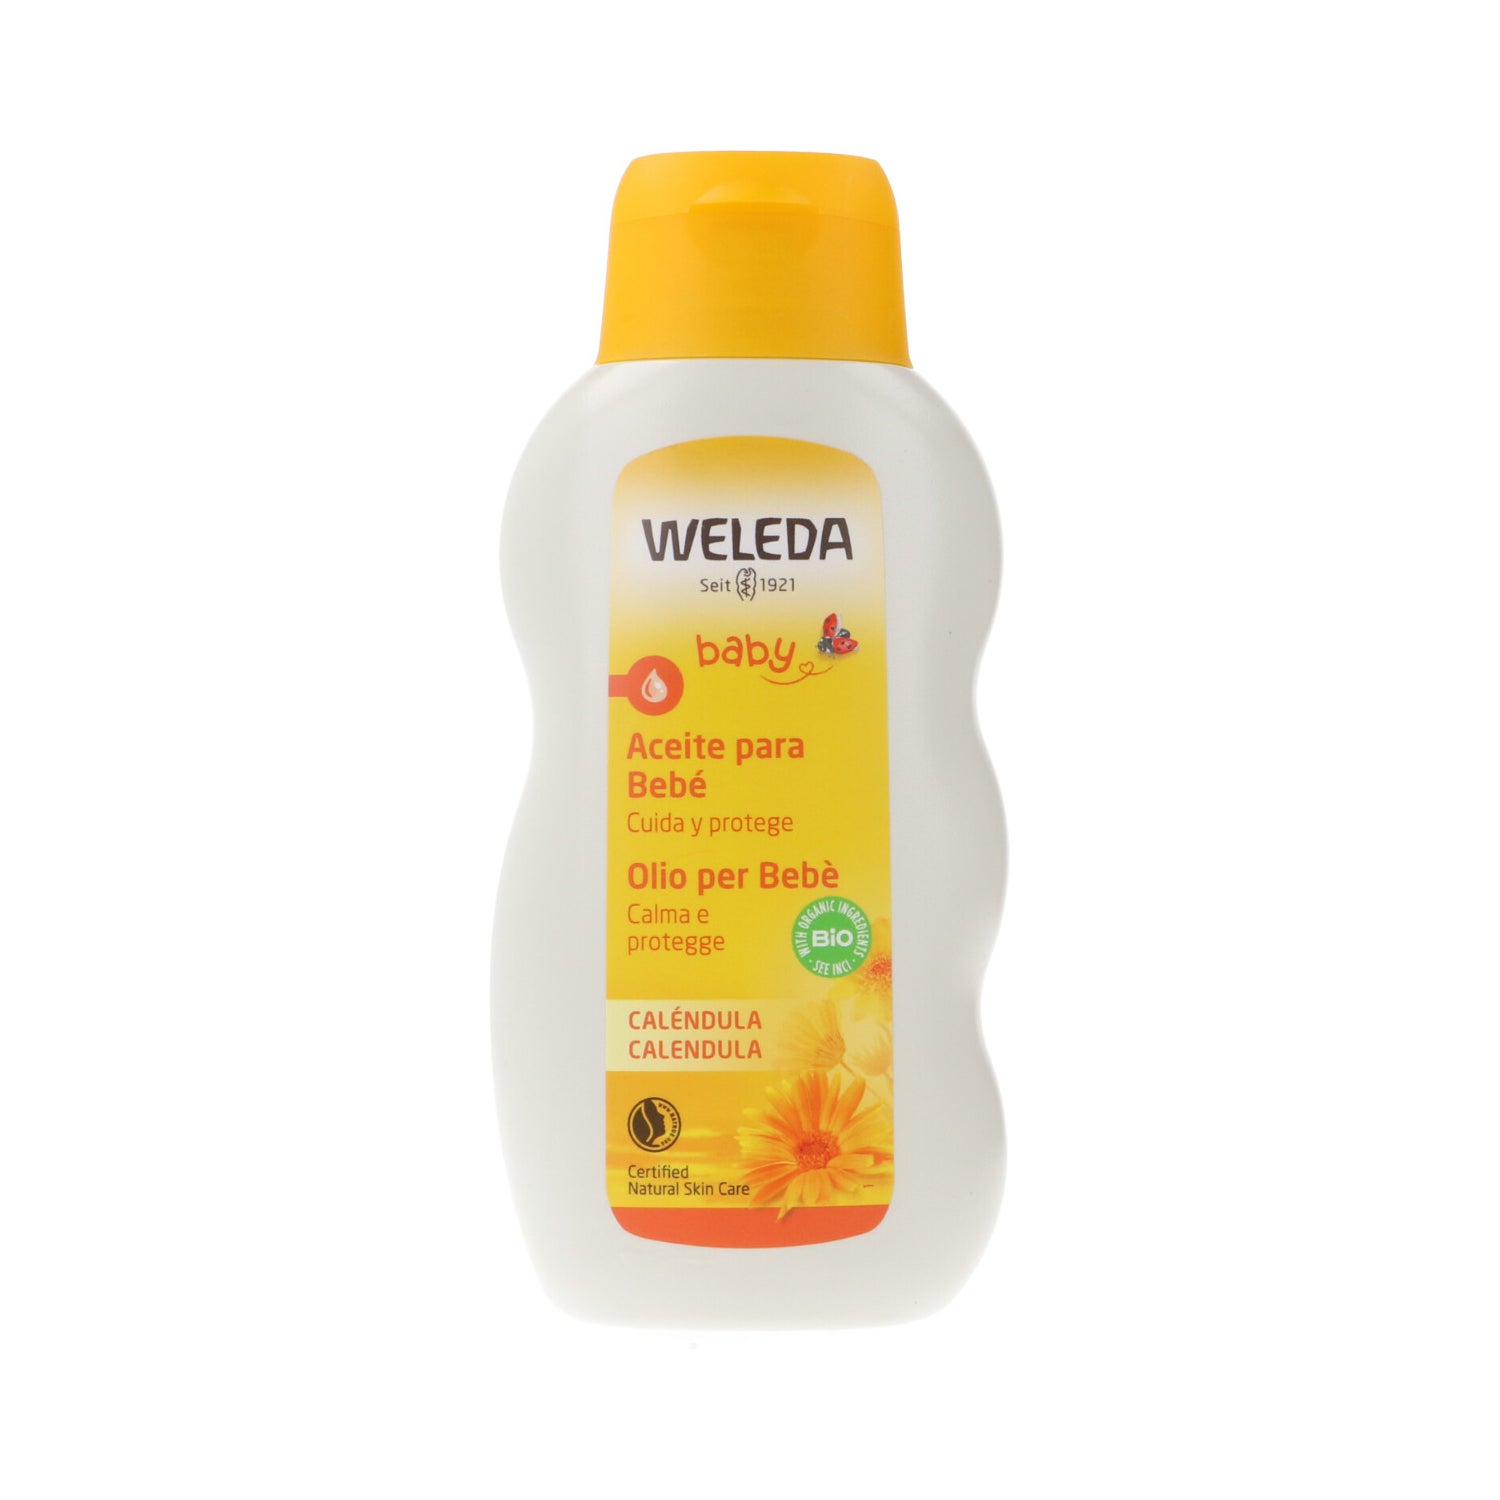 WELEDA Baby Oil Calendula 200ml